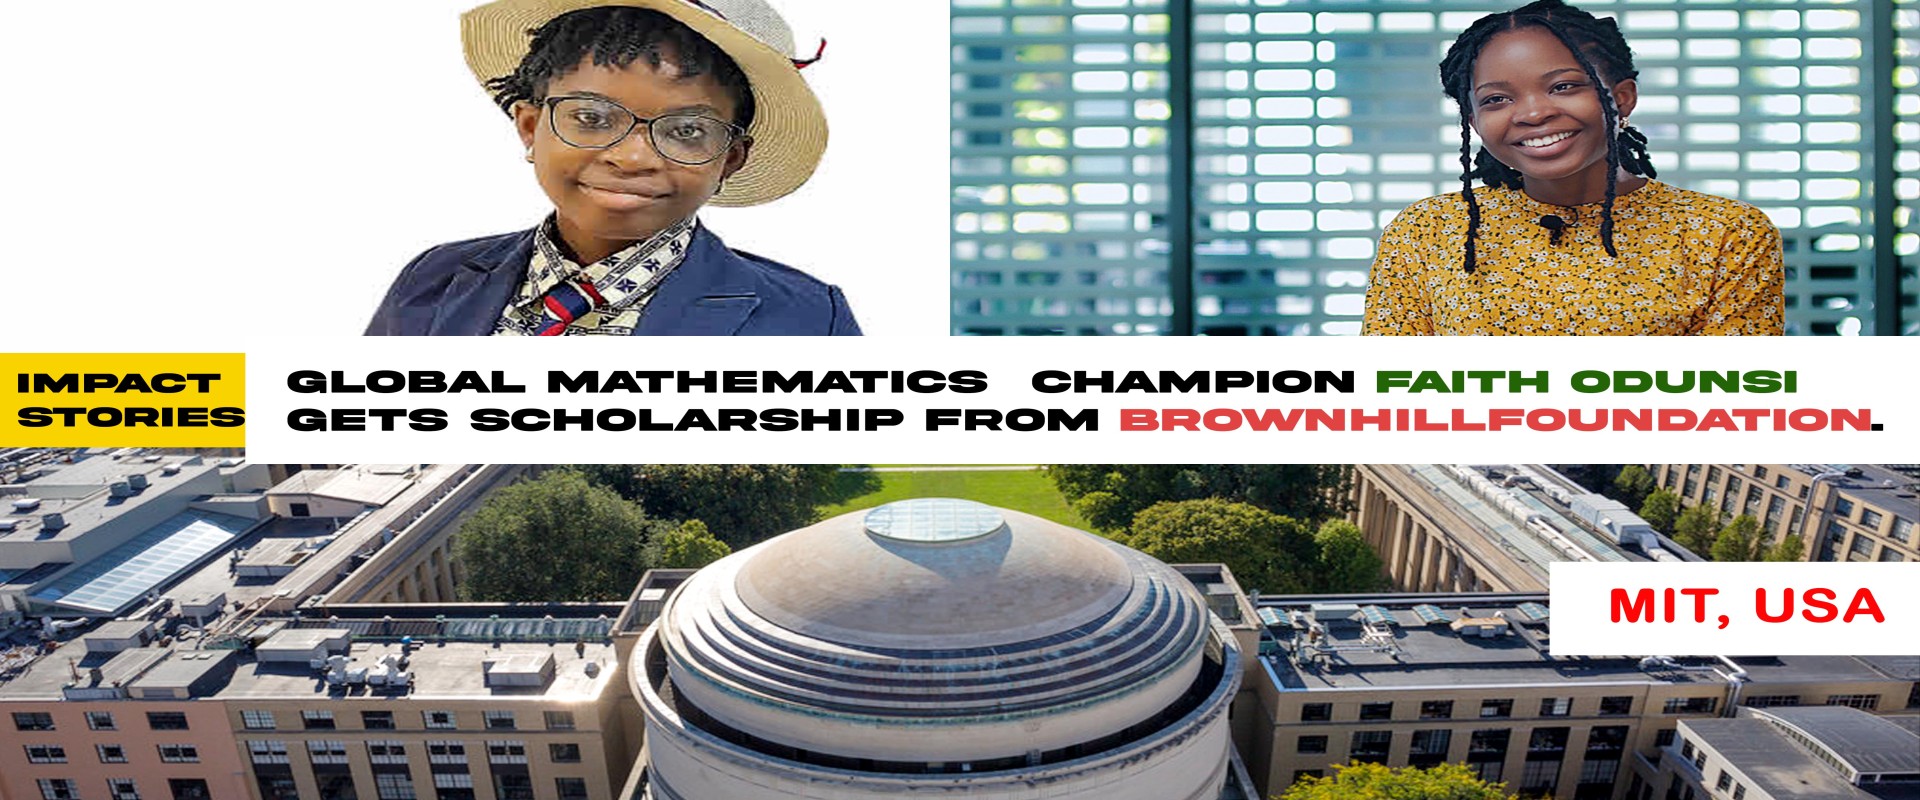 Global Mathematics Champion, Faith Odunsi gets scholarship from Brownhill Foundation.